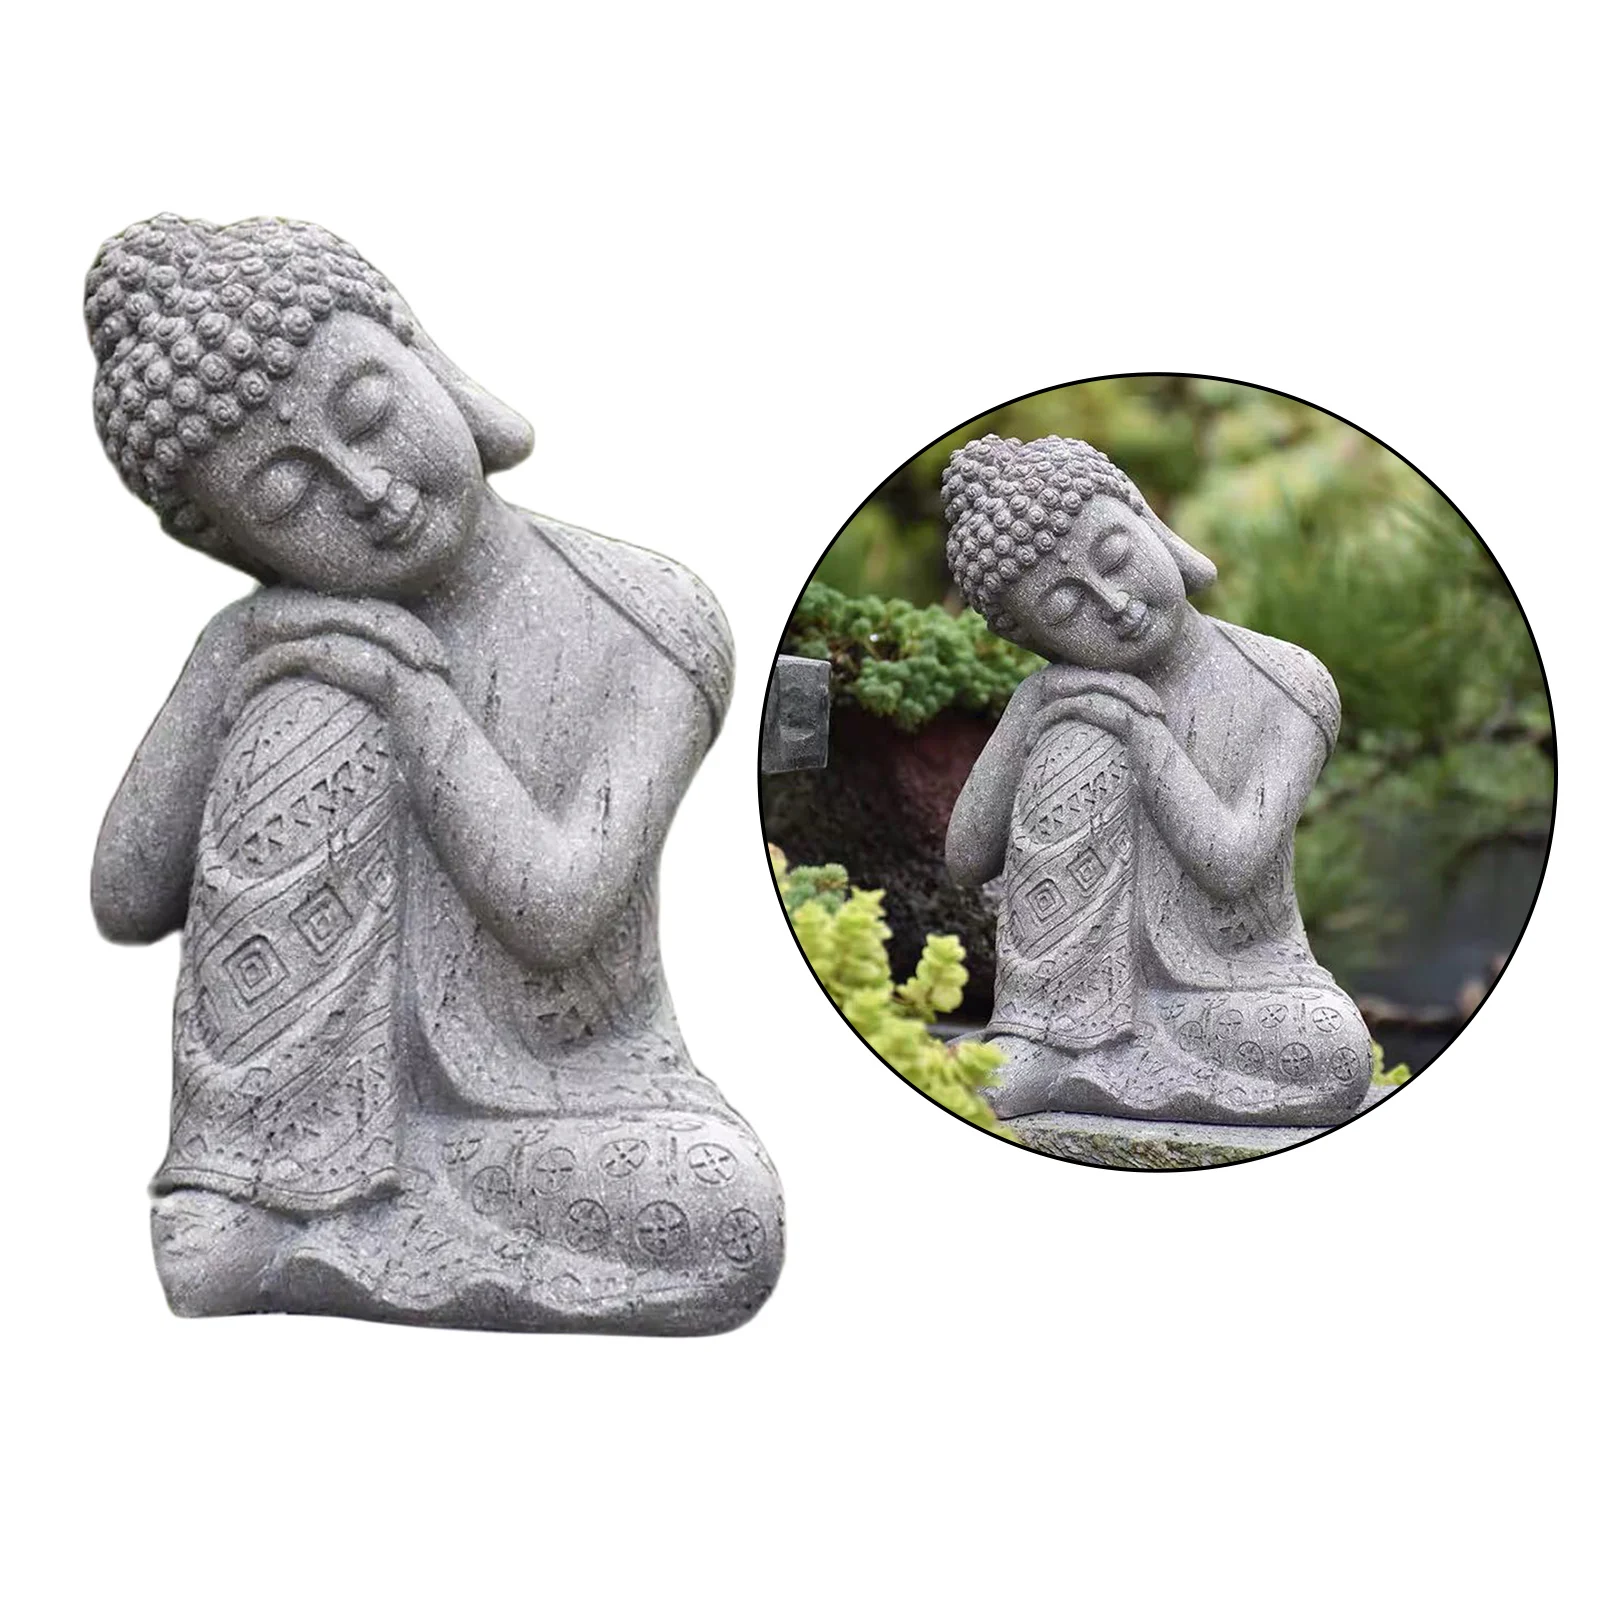 Sleeping Thai Buddha Statues Ornament Figurine, Garden Buddha Statue Sculpture Indoor/Outdoor Decor for Home,Patio Art Decor